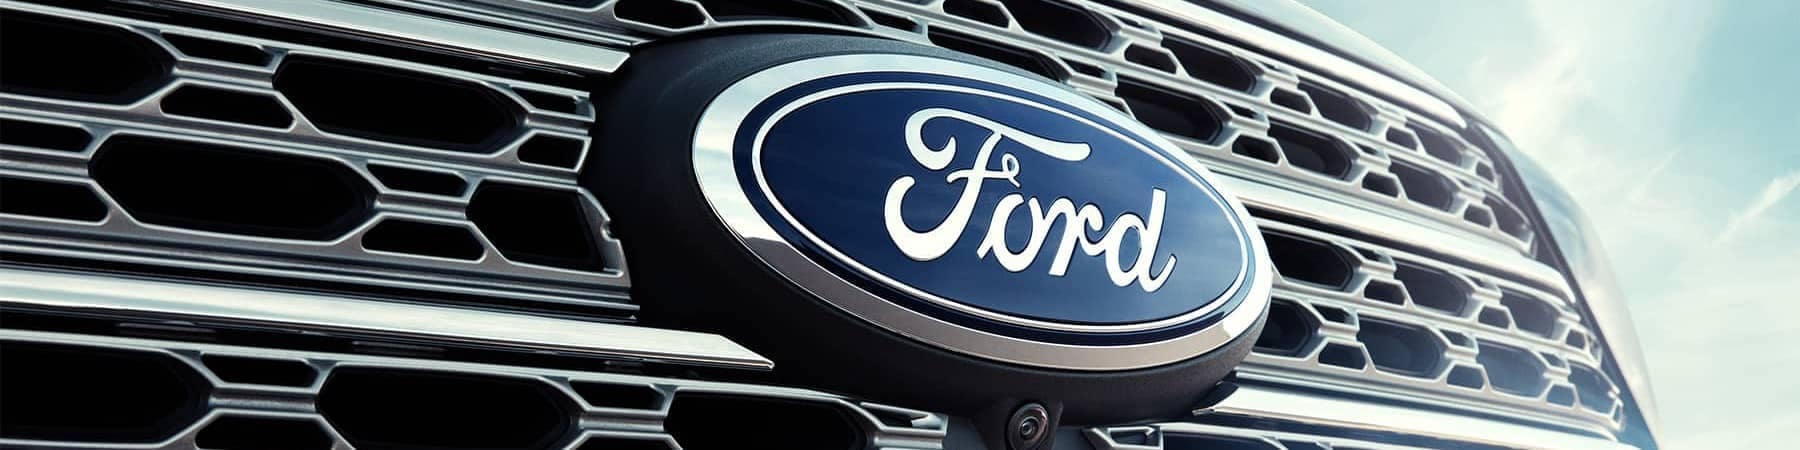 2021-Ford-Explorer-front-grille